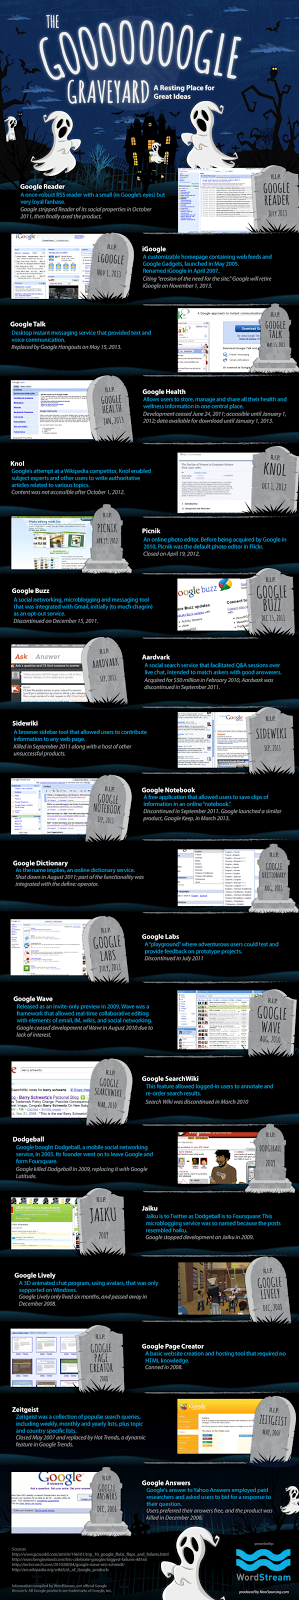 Google Graveyard, i flop di Google in un'infografica